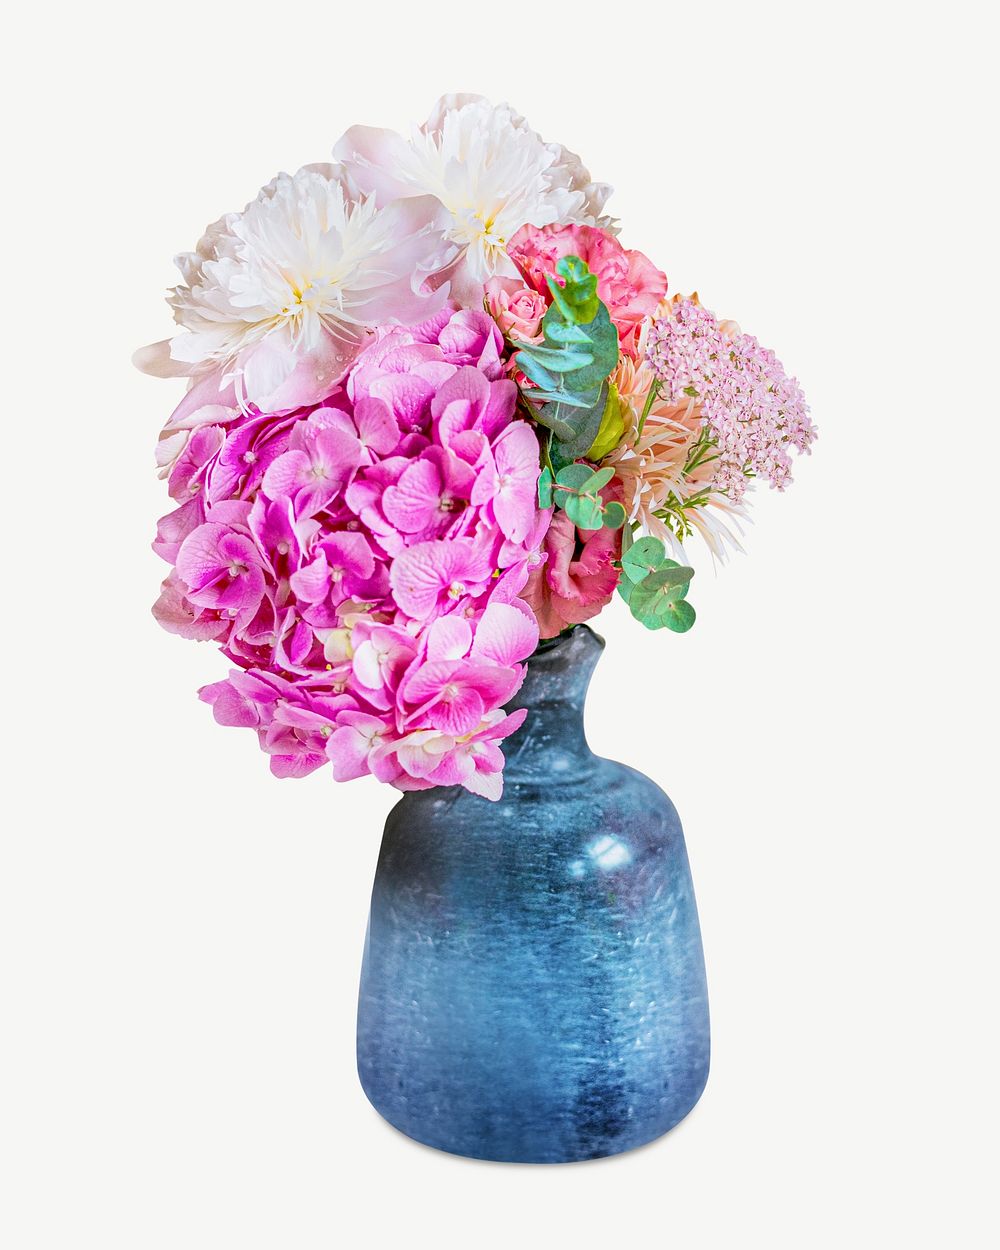 Blue vase flowers  collage element graphic psd